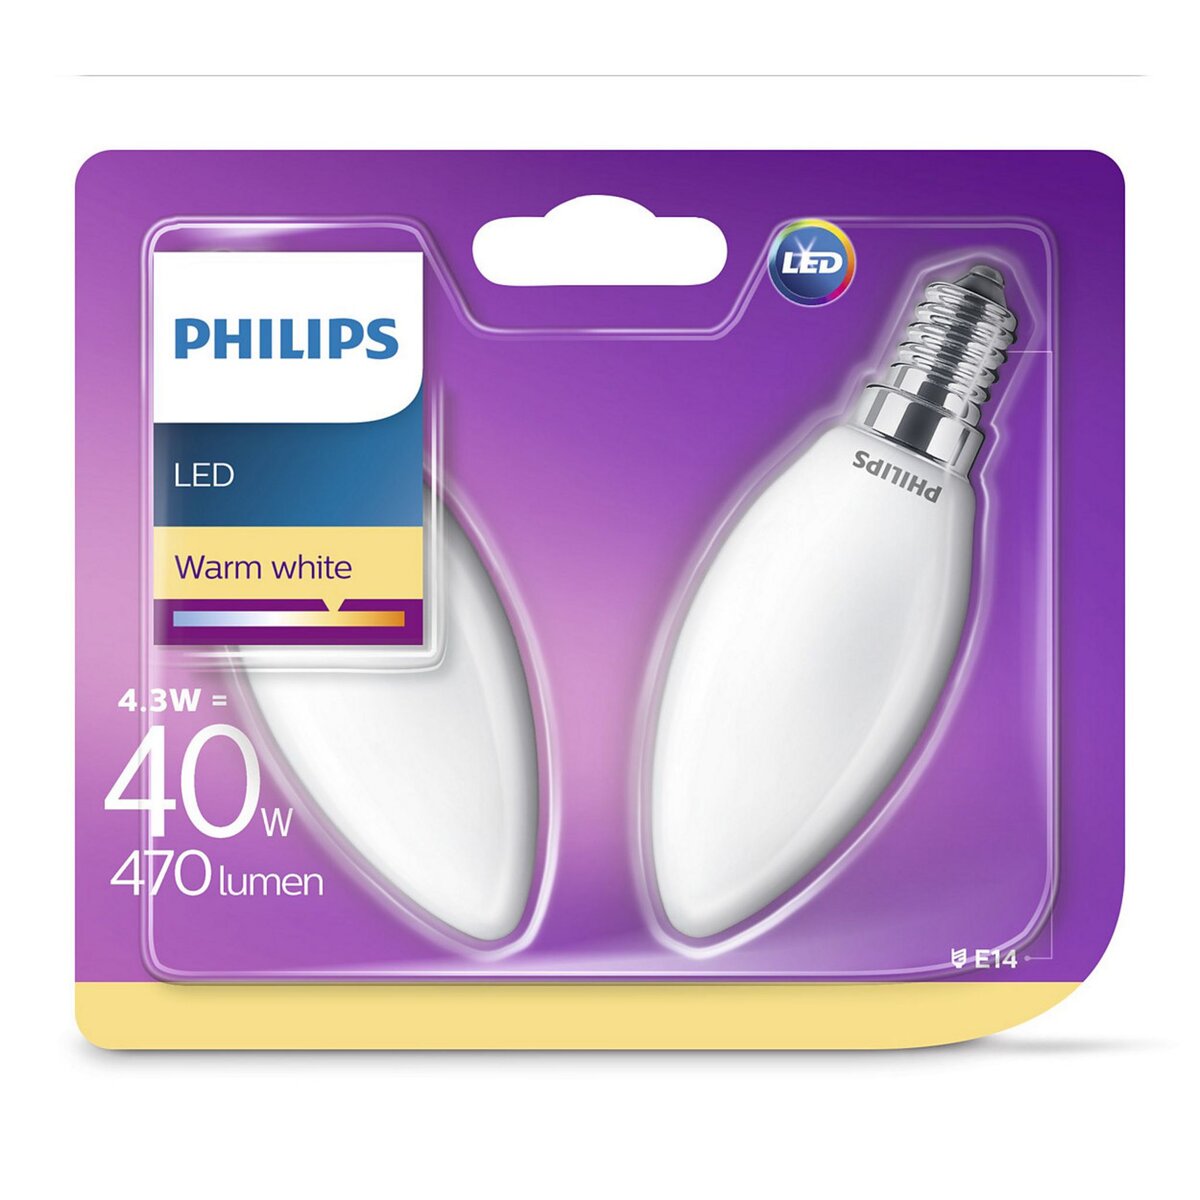 PHILIPS 2 ampoules LED Flamme 4,3W (40W) - E14